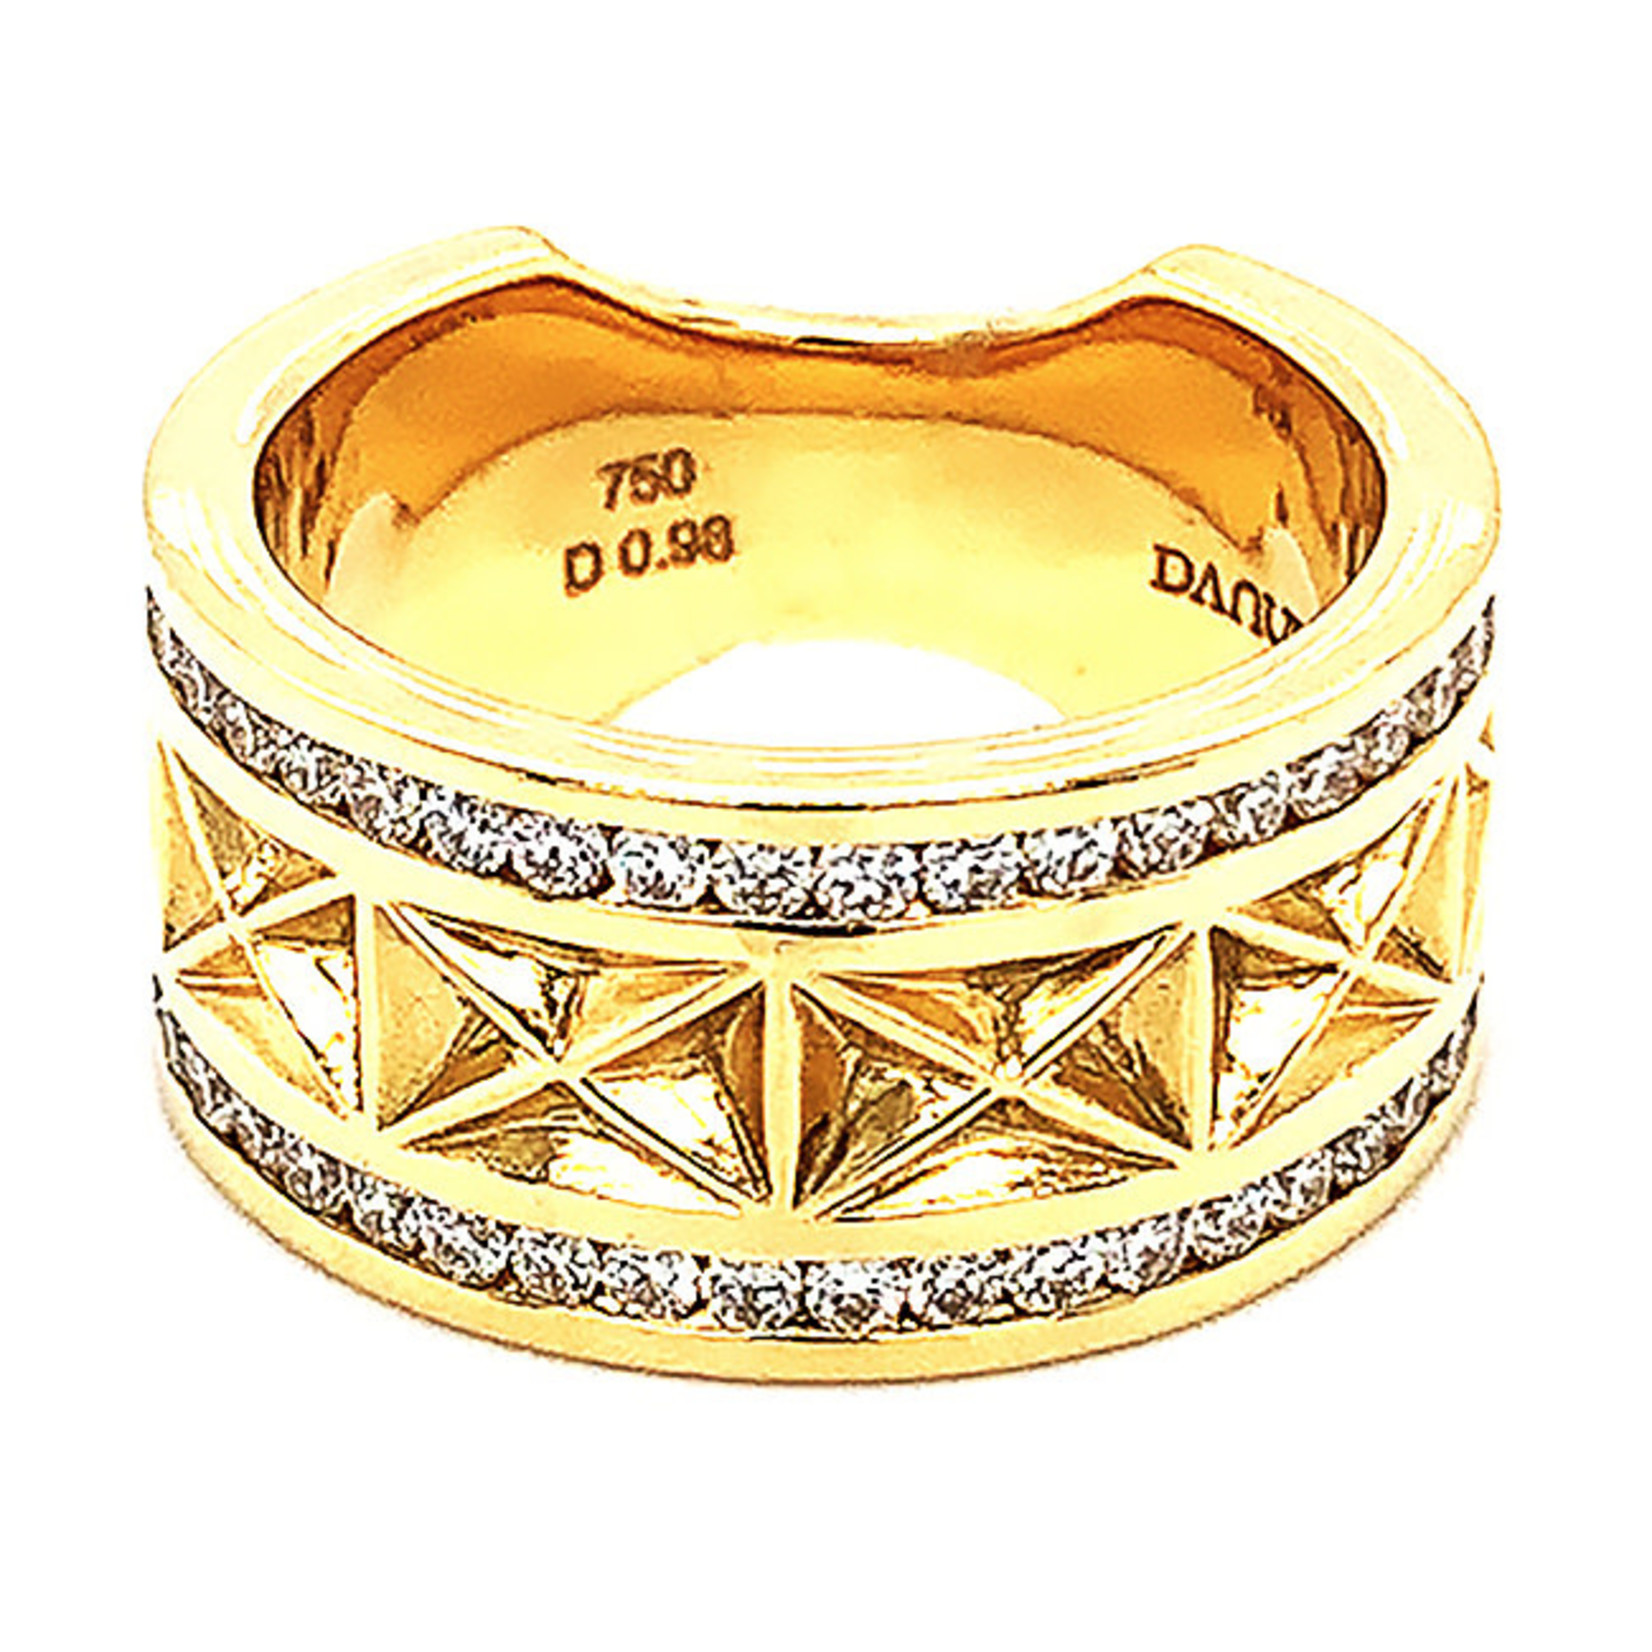 Jewelry By Danuta - Gold Drawer .89ct. Diamond  & 18kt. Gold Band